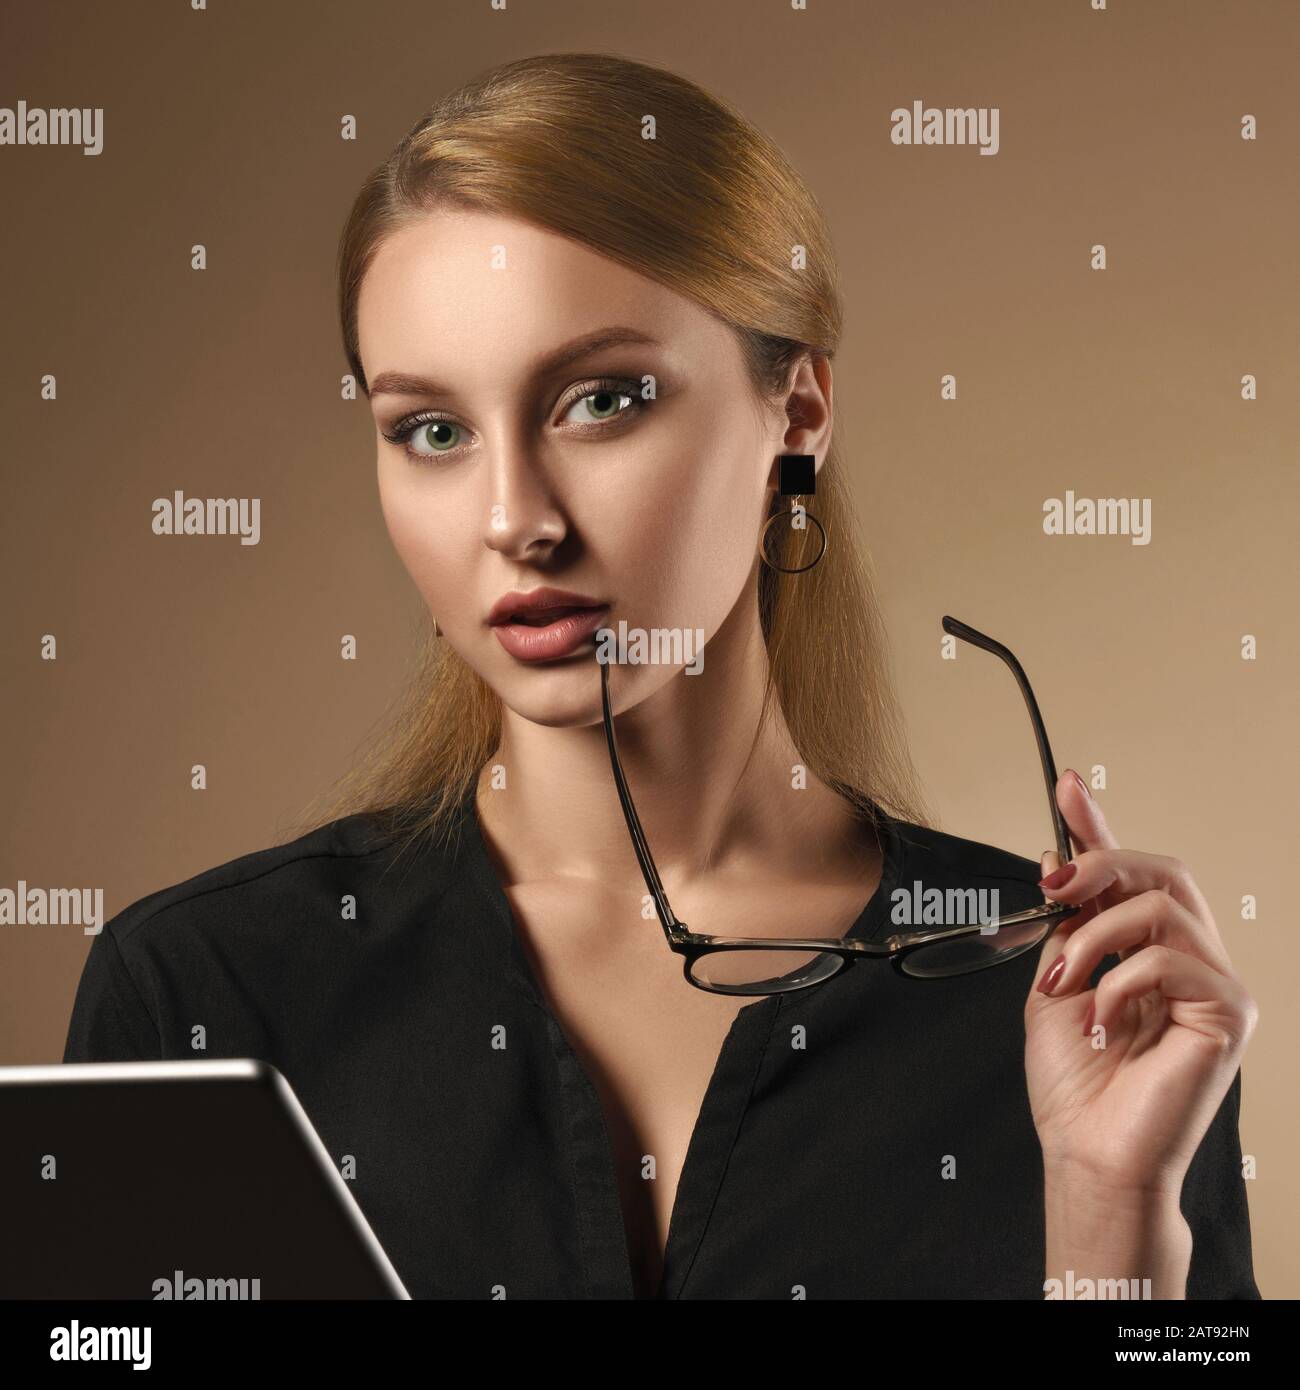 Girl wearing black shirt holding eye glasses while using tablet on beige background Stock Photo